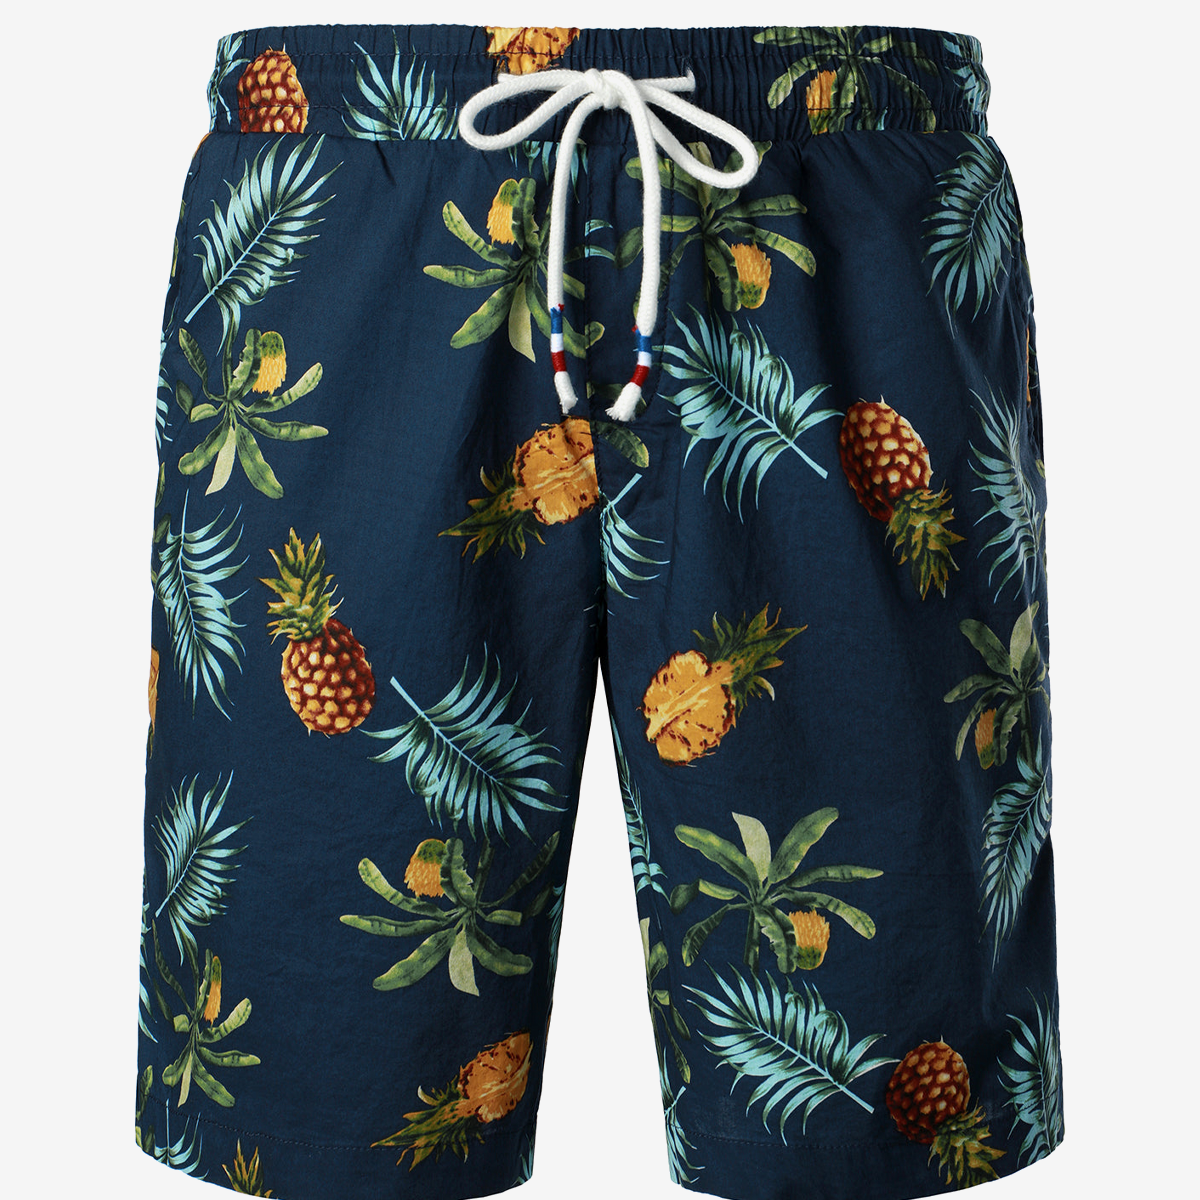 Men's Breathable Cotton Watermelon Beach Hawaiian Aloha Summer Shorts